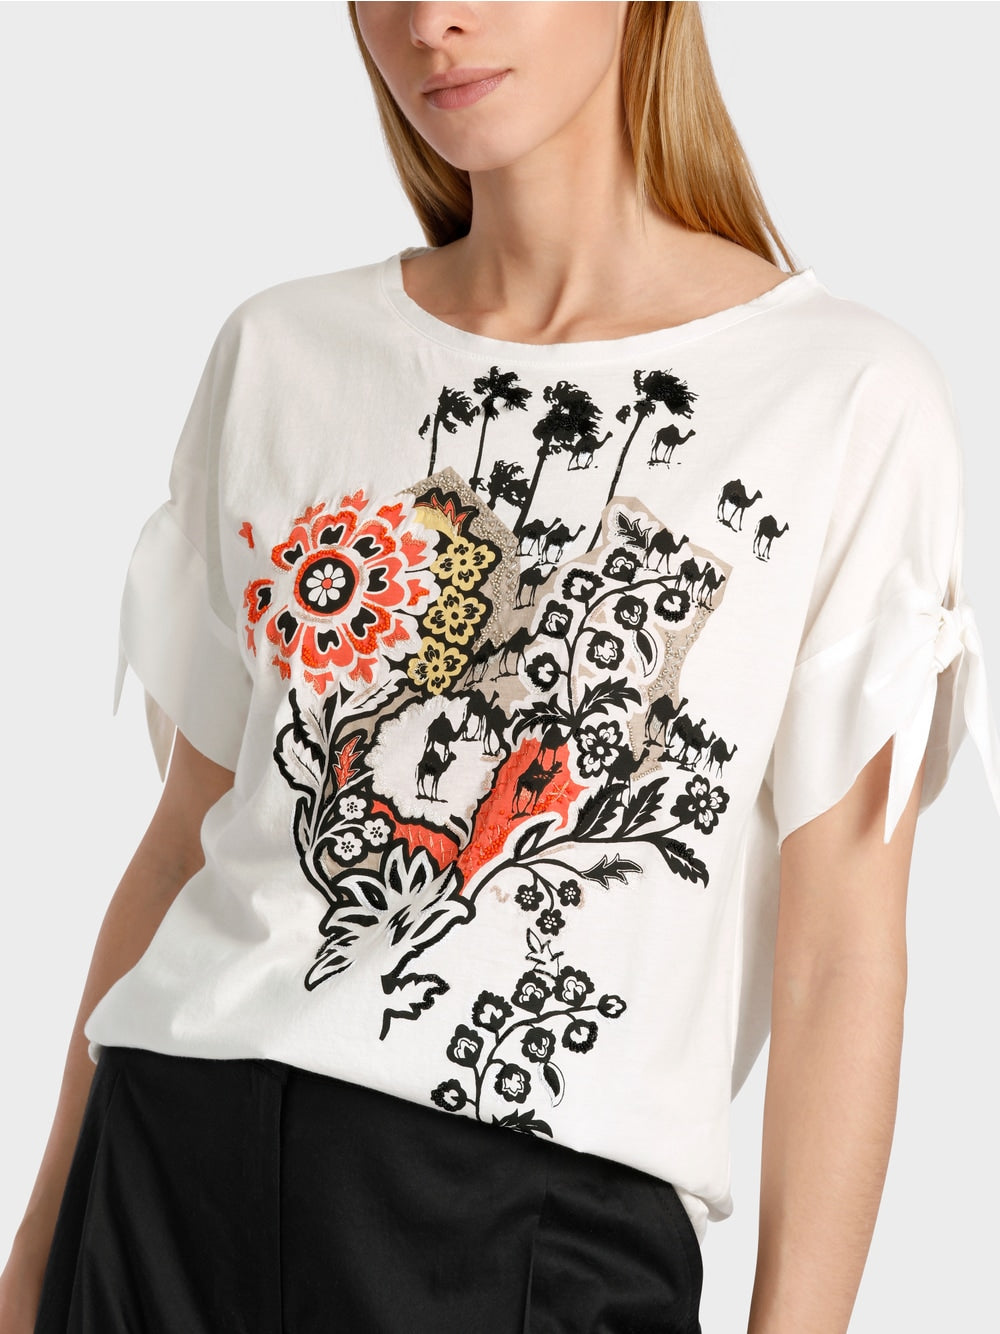 oriental fauna and flora T-shirt